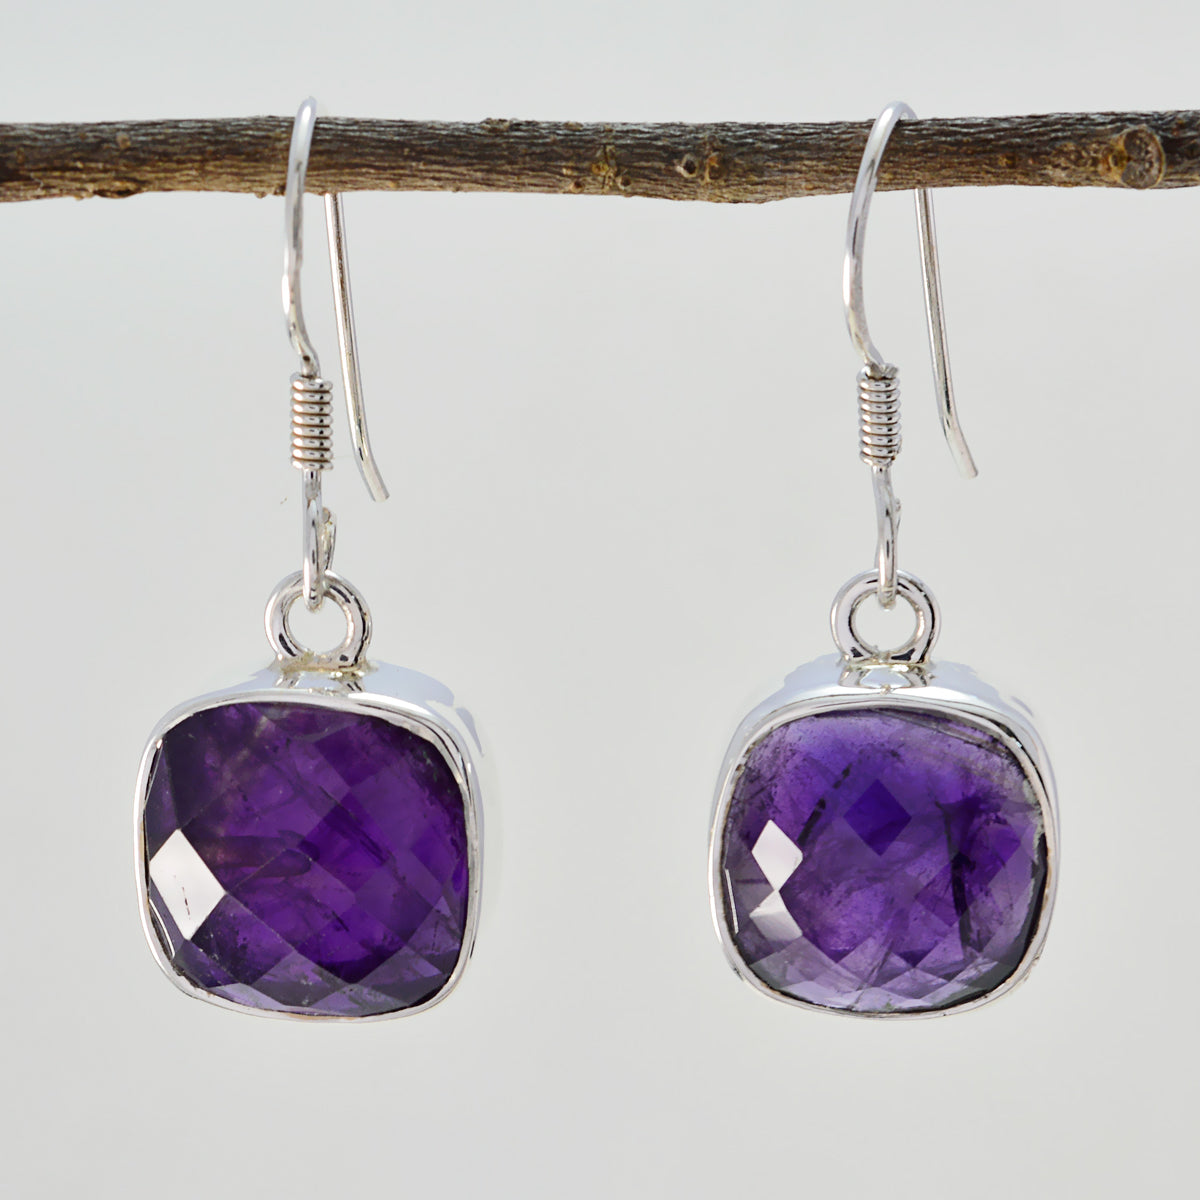 Riyo Real Gemstones Octogon Checker Purple Amethyst Silver Earring gift for sister